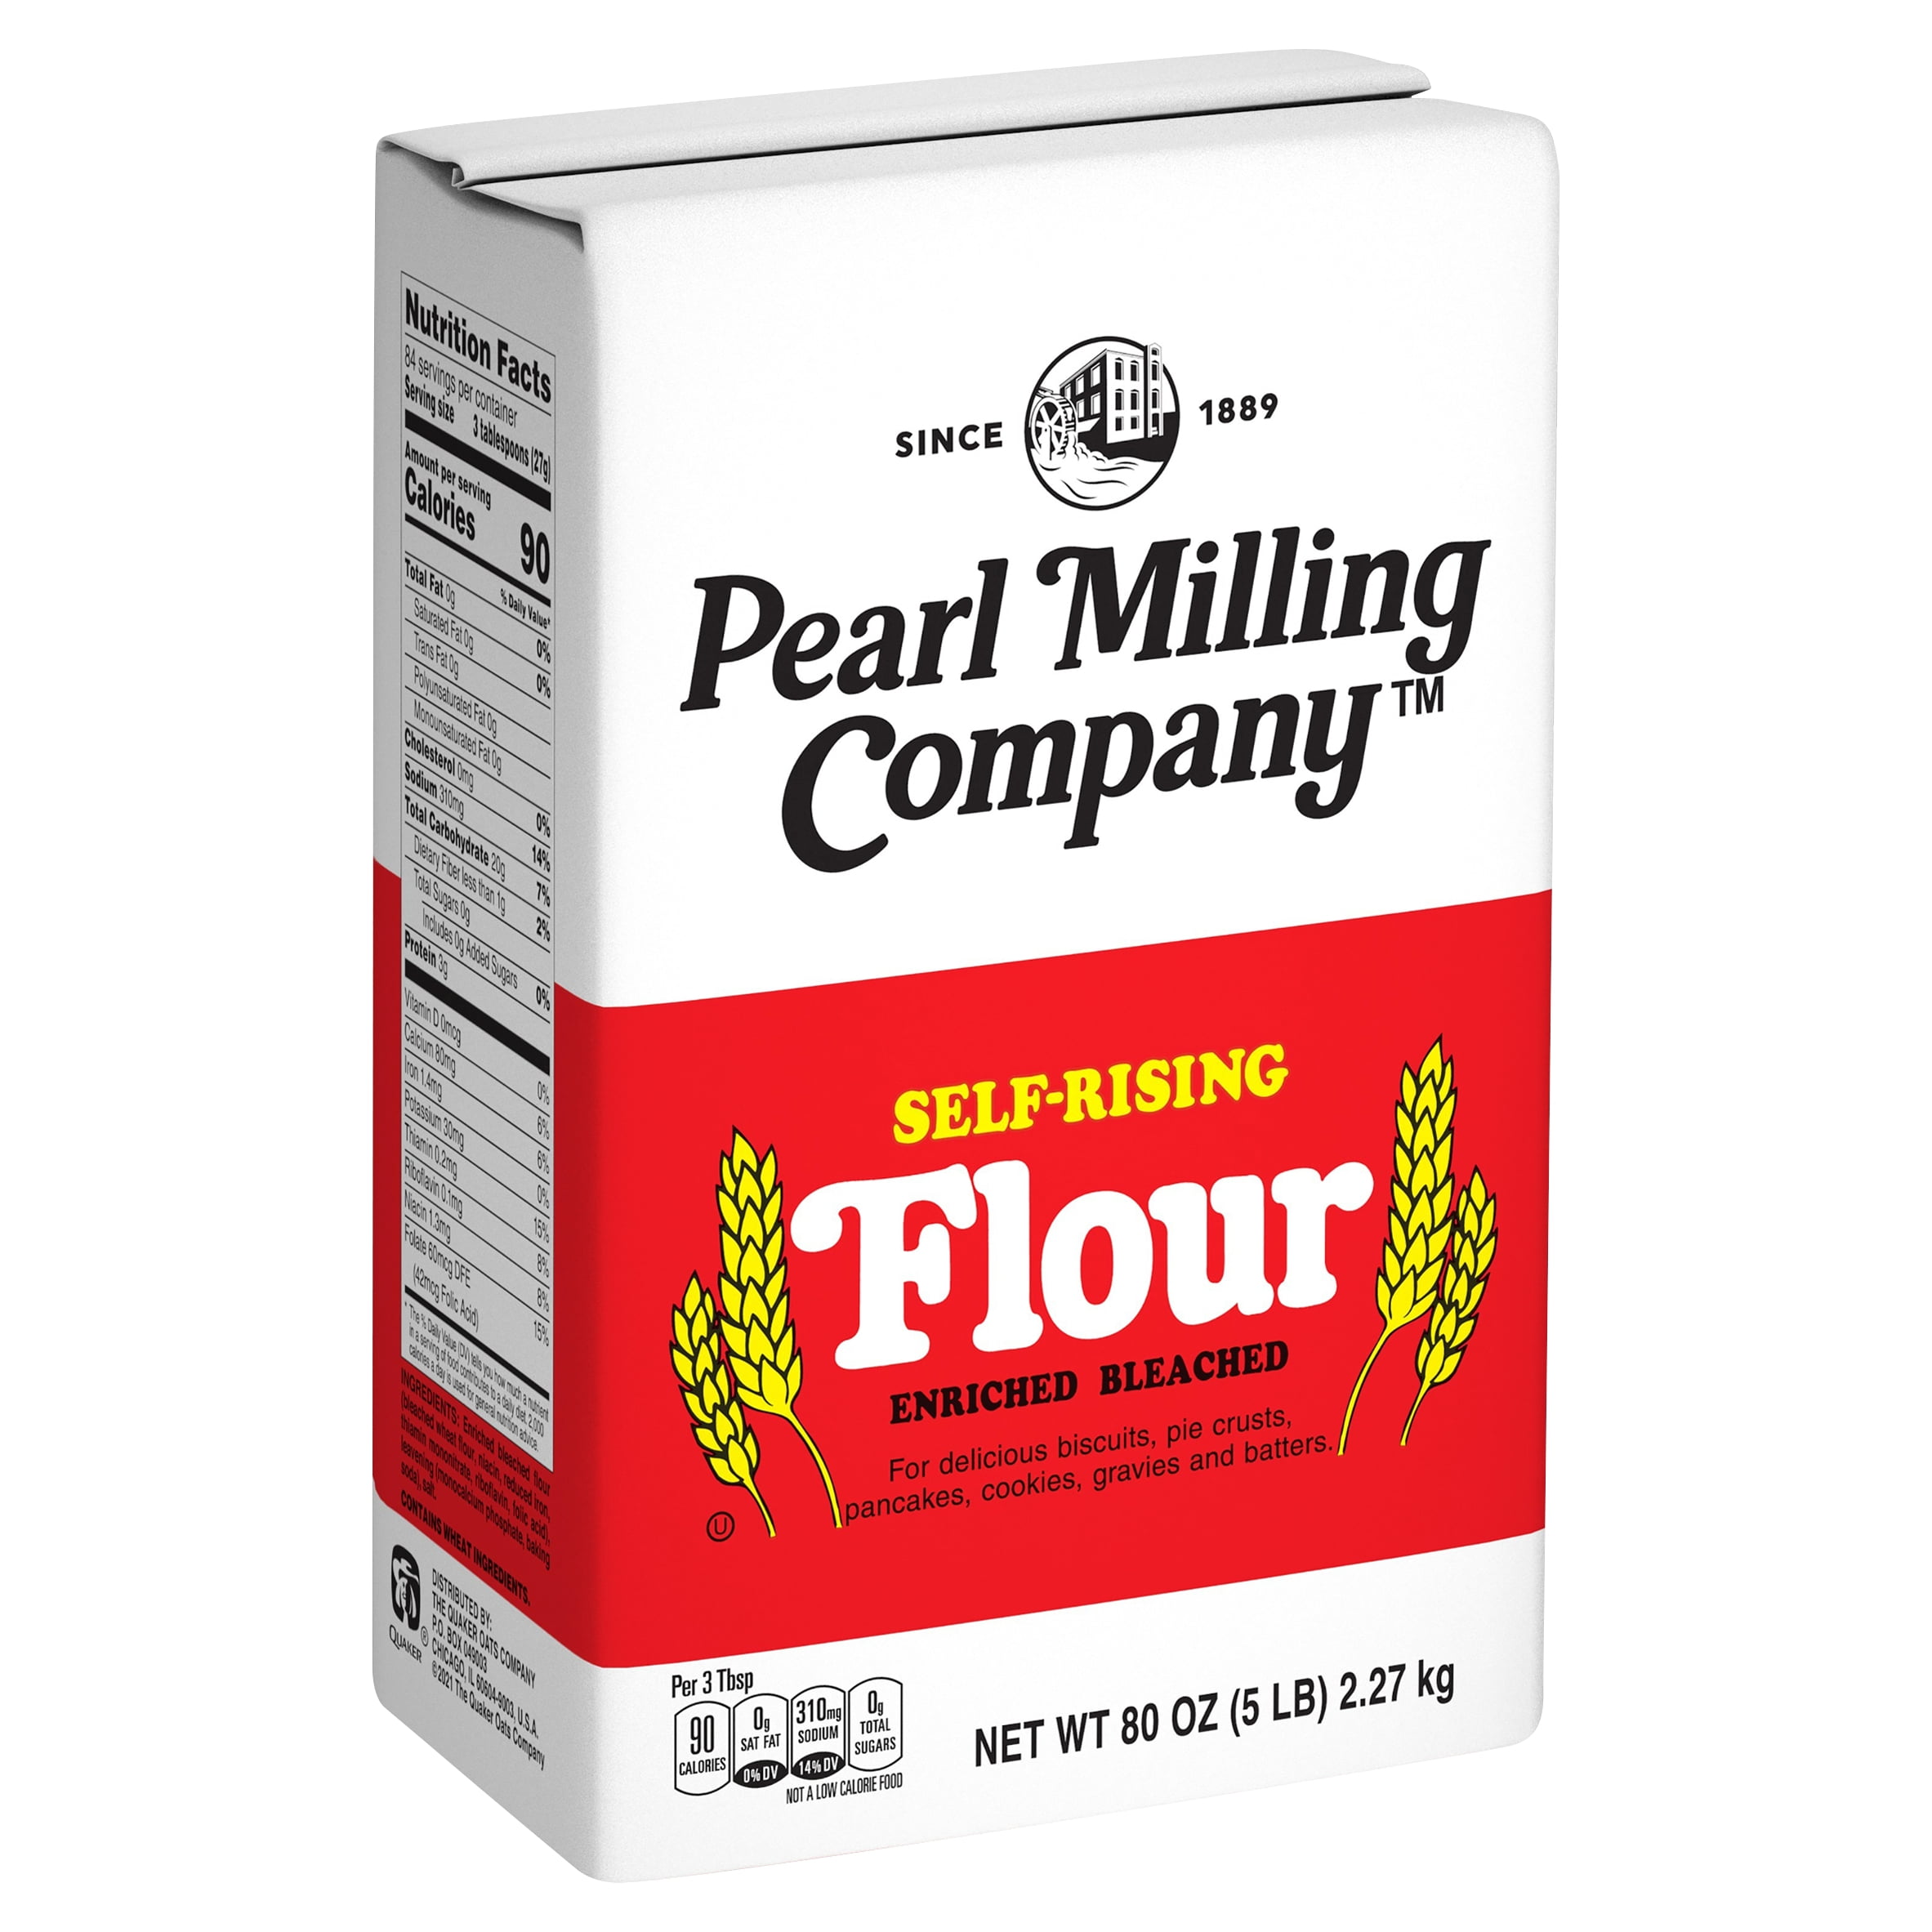 Pearl Milling Company Flour, 5lb